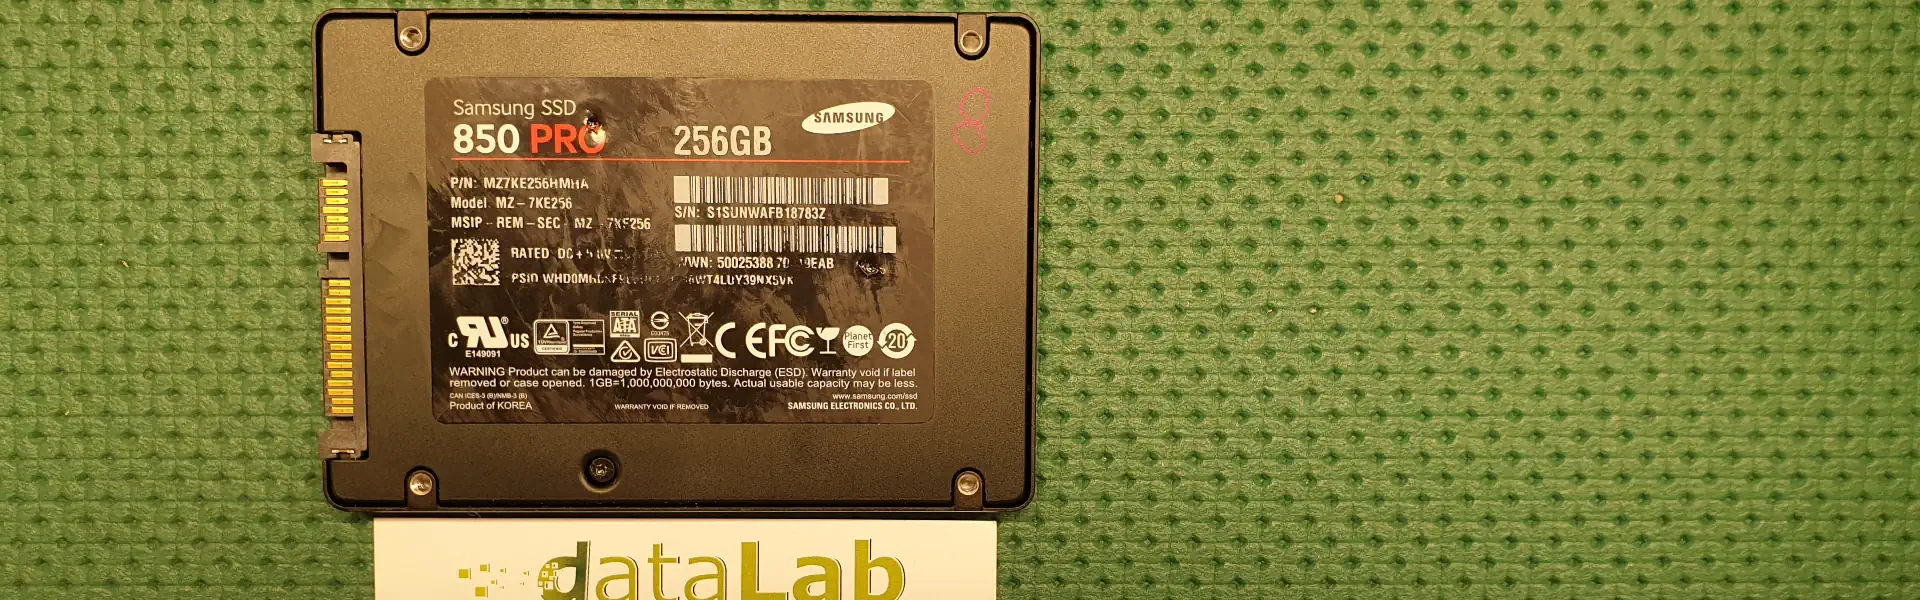 SSD Samsung 850 pro